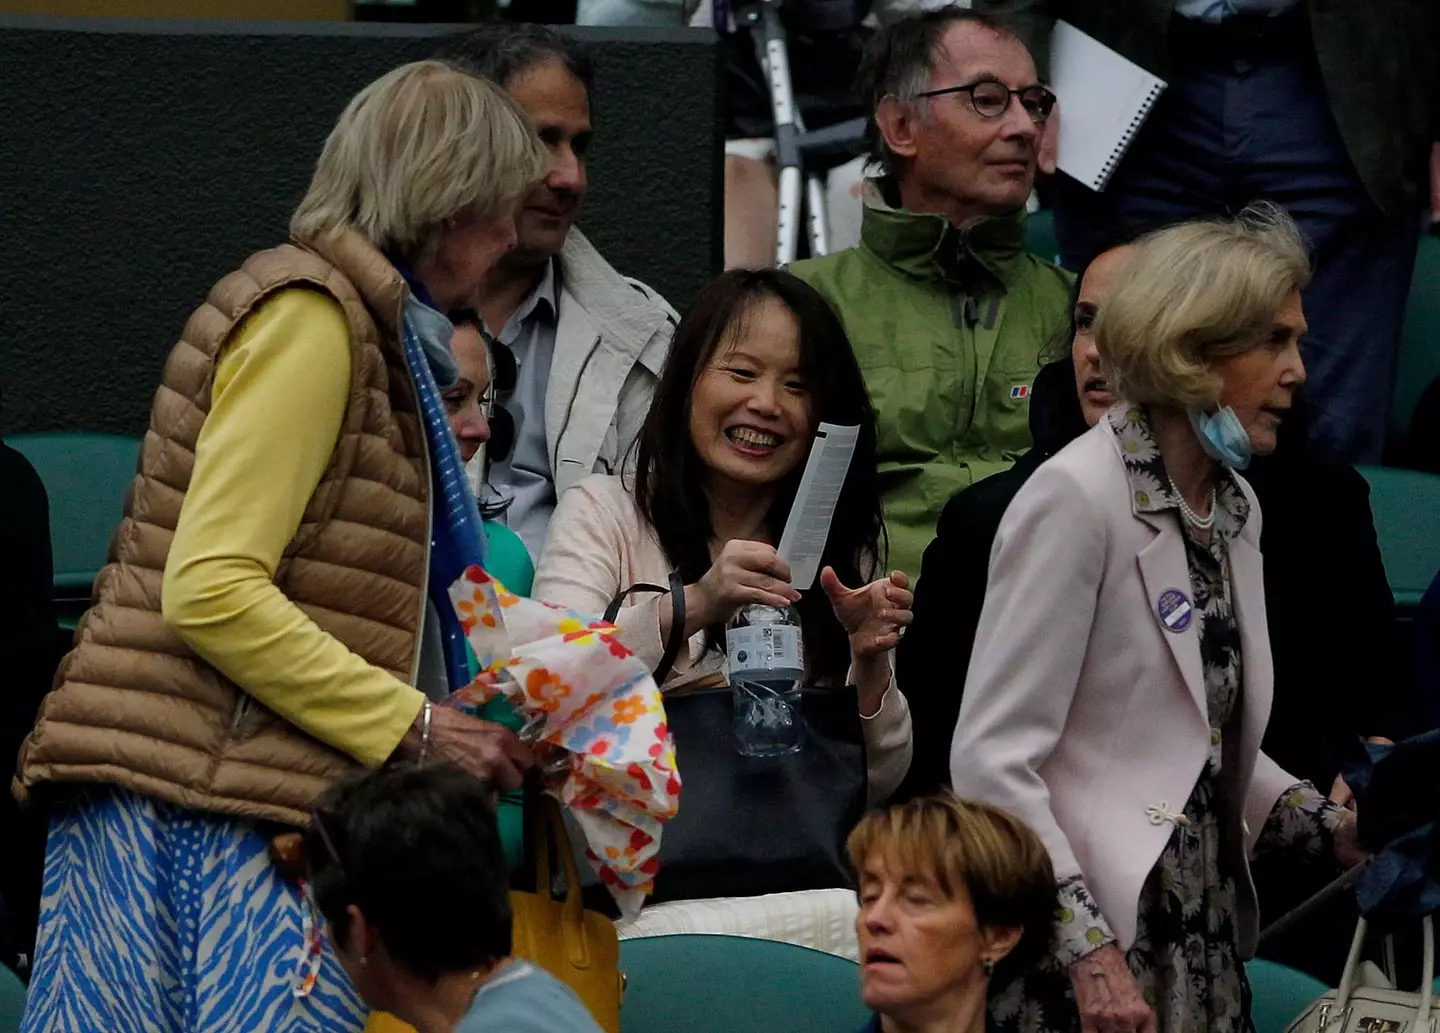 Emma's mum at Wimbledon earlier this year (